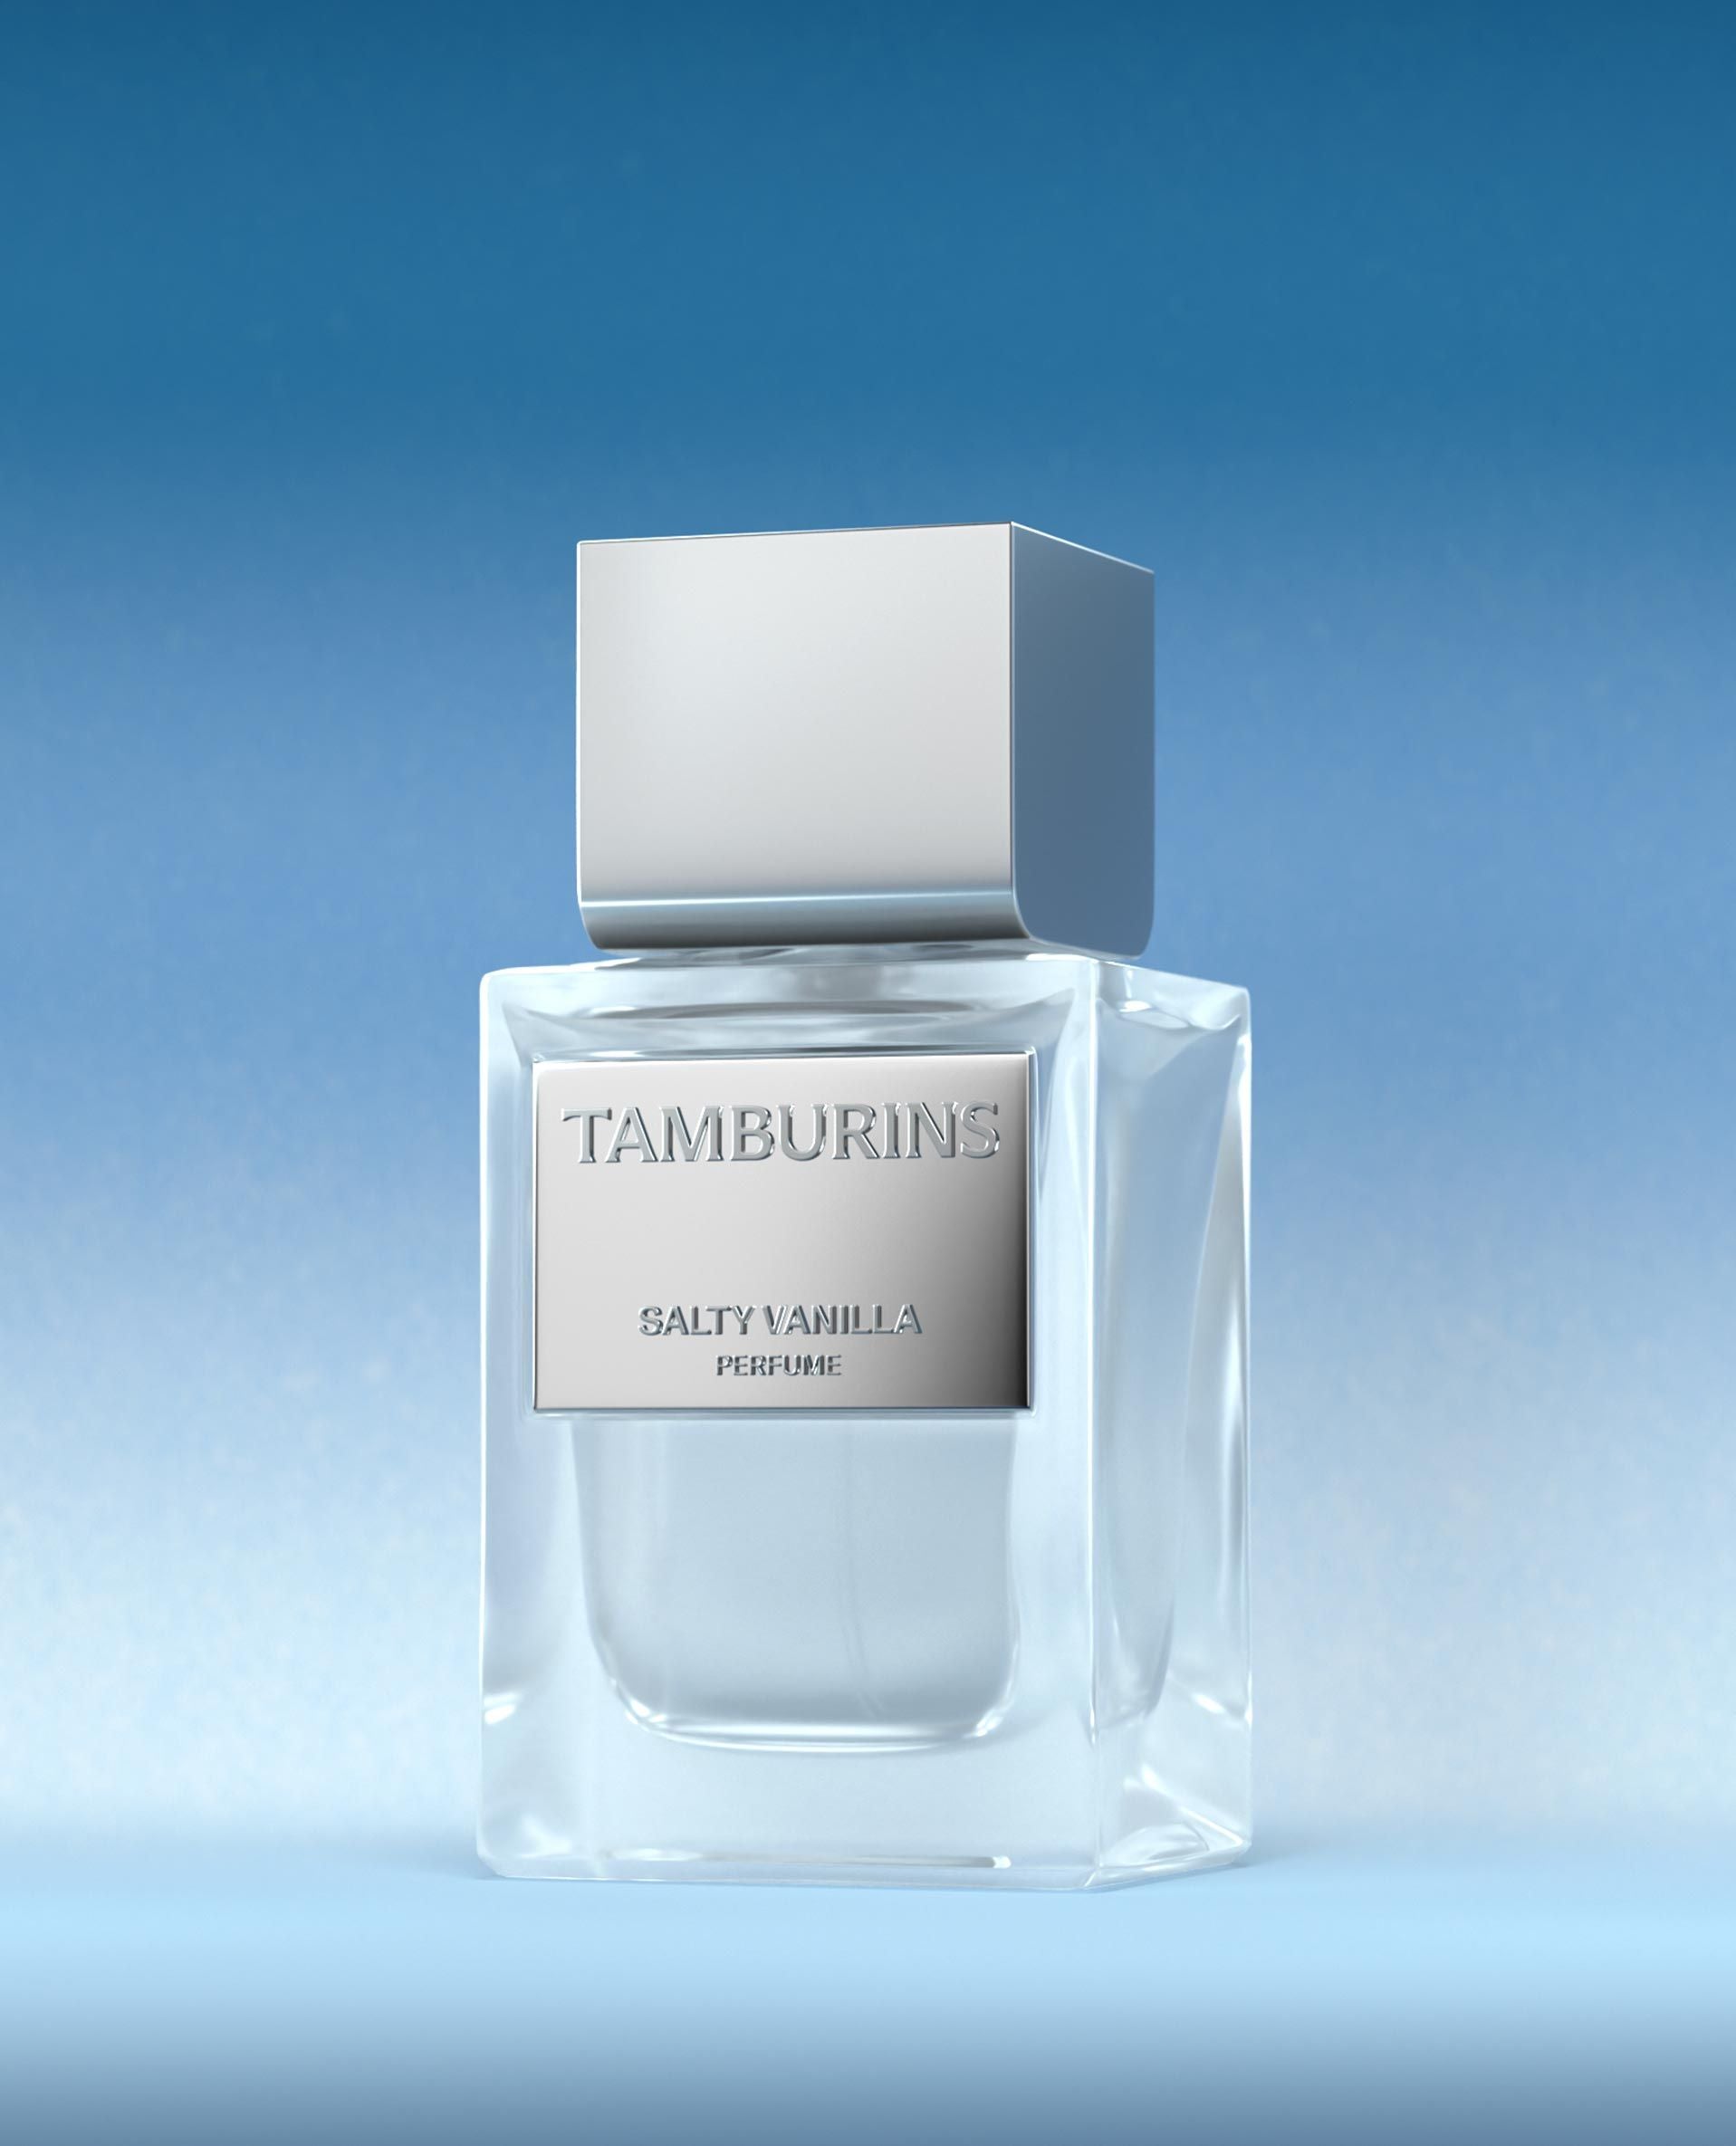 TAMBURINS PERFUME SALTY VANILLA 11ml / 50ml